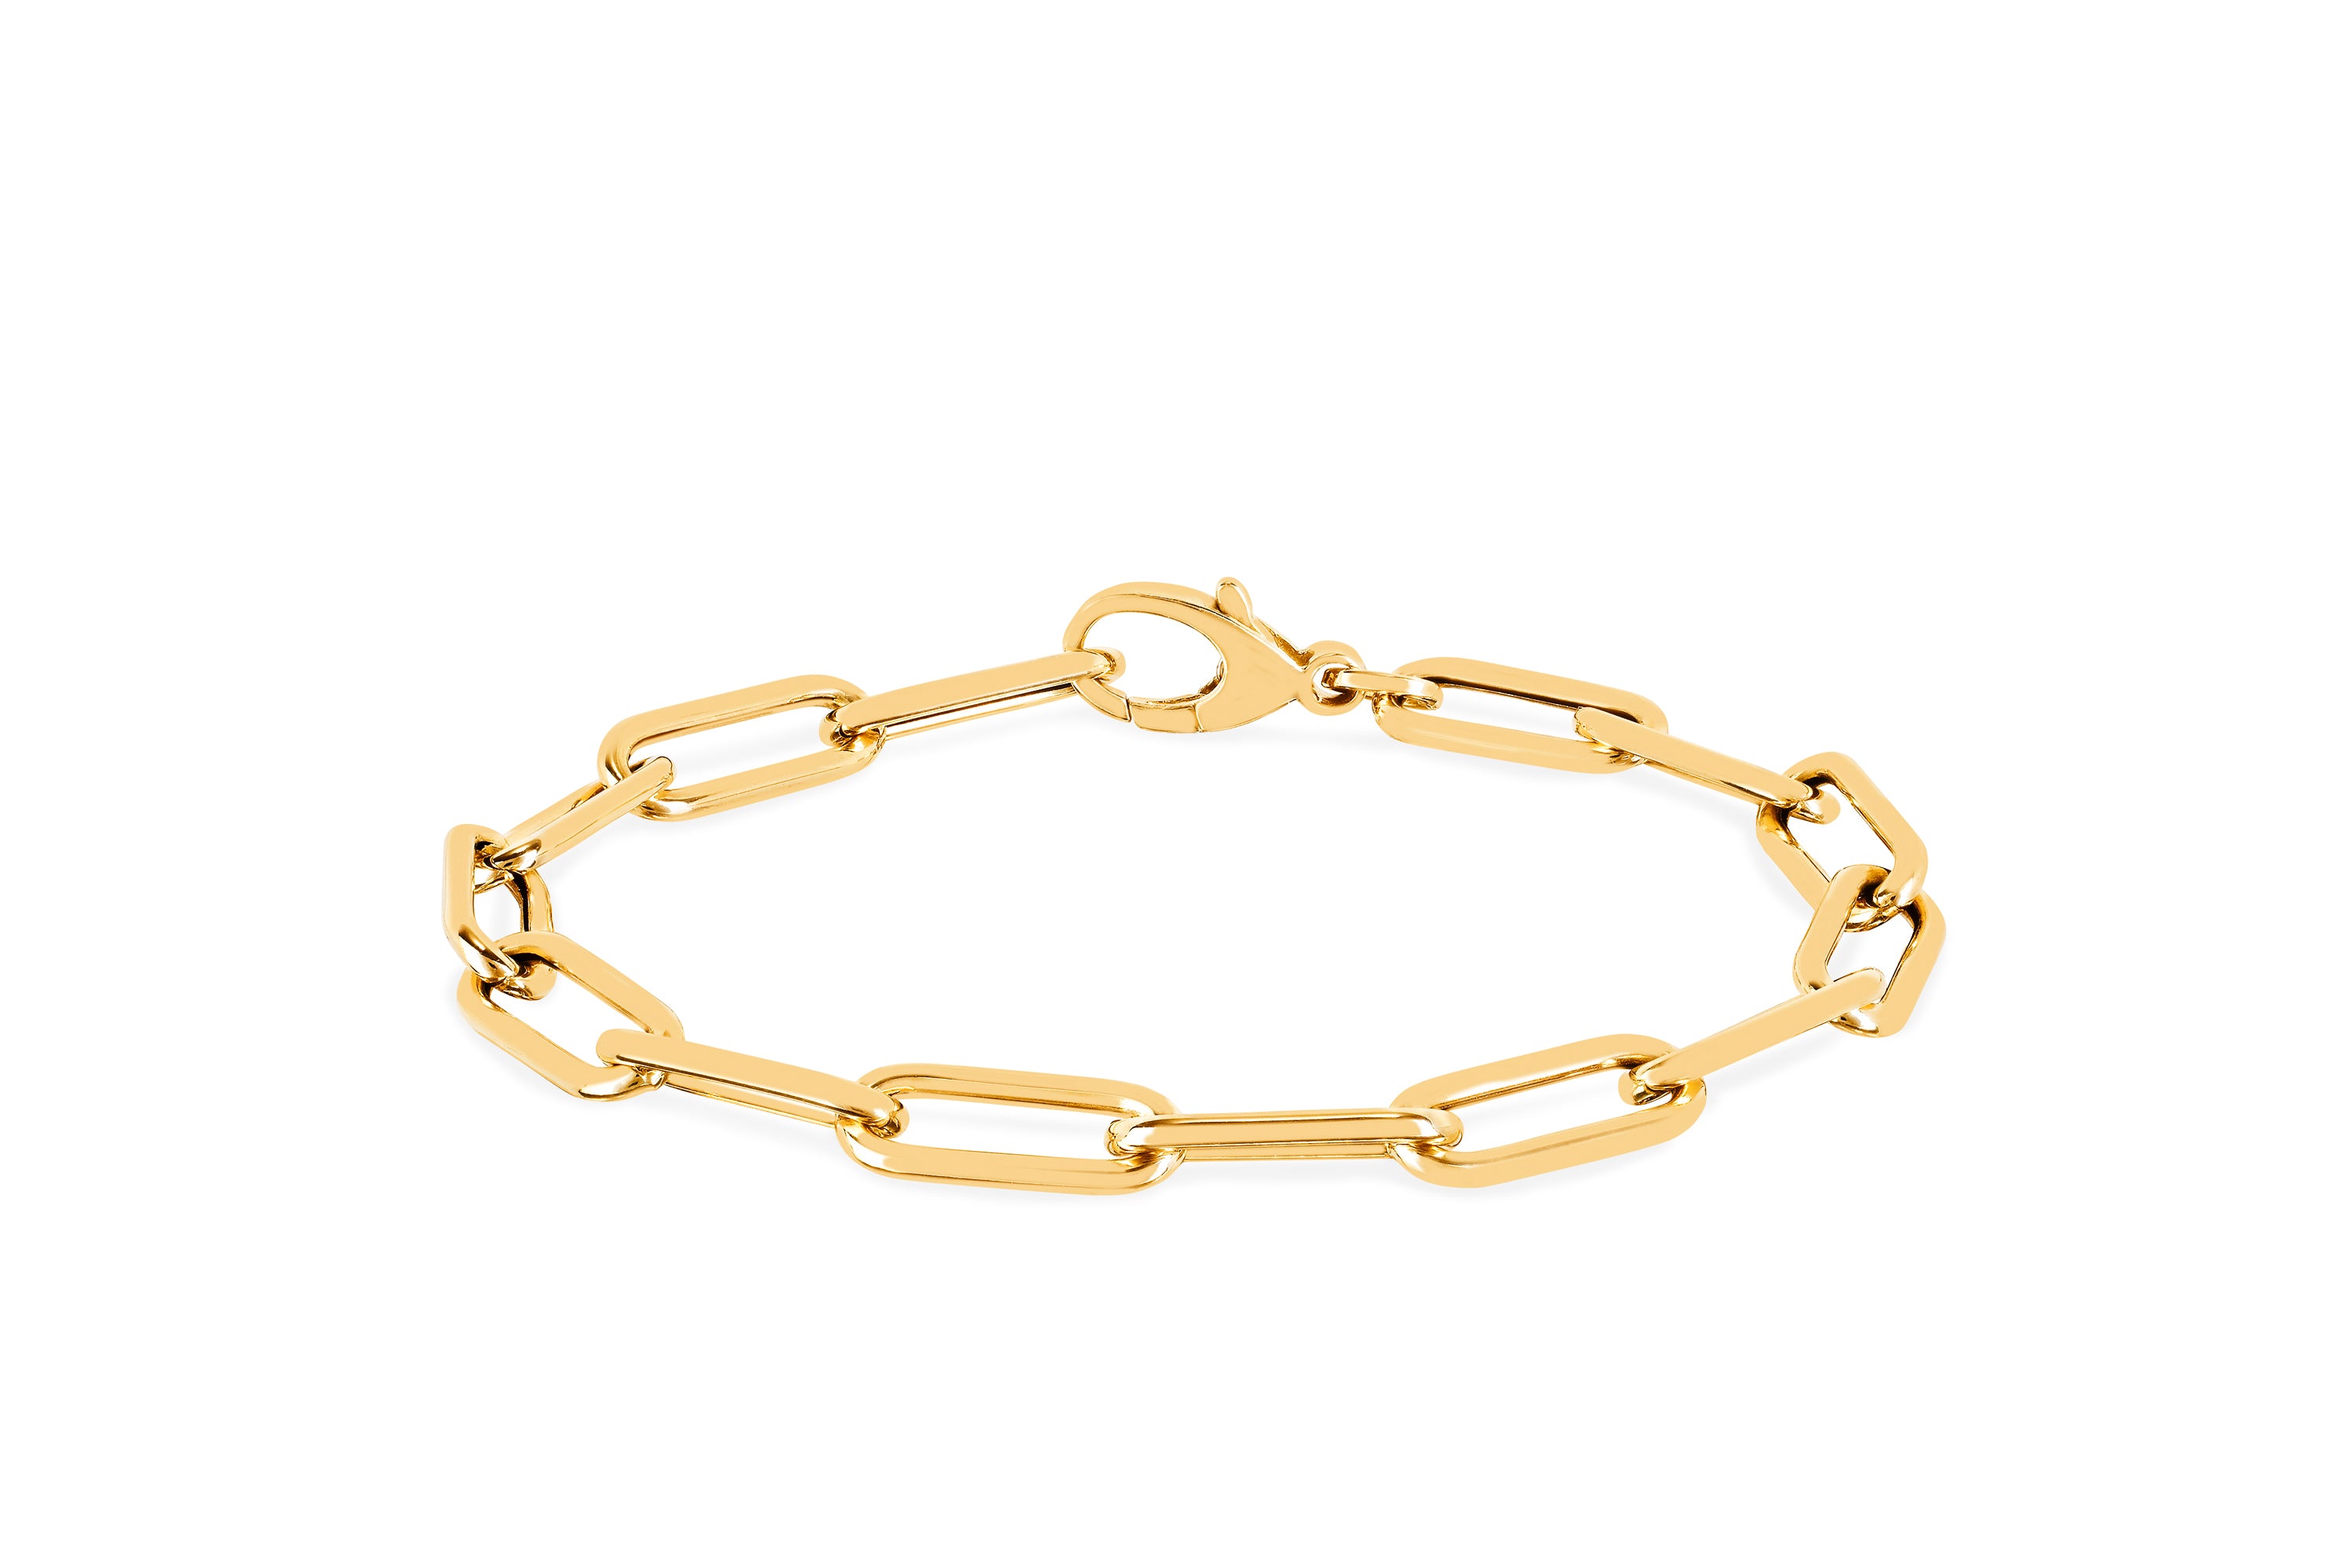 Jumbo Lola Chain Bracelet